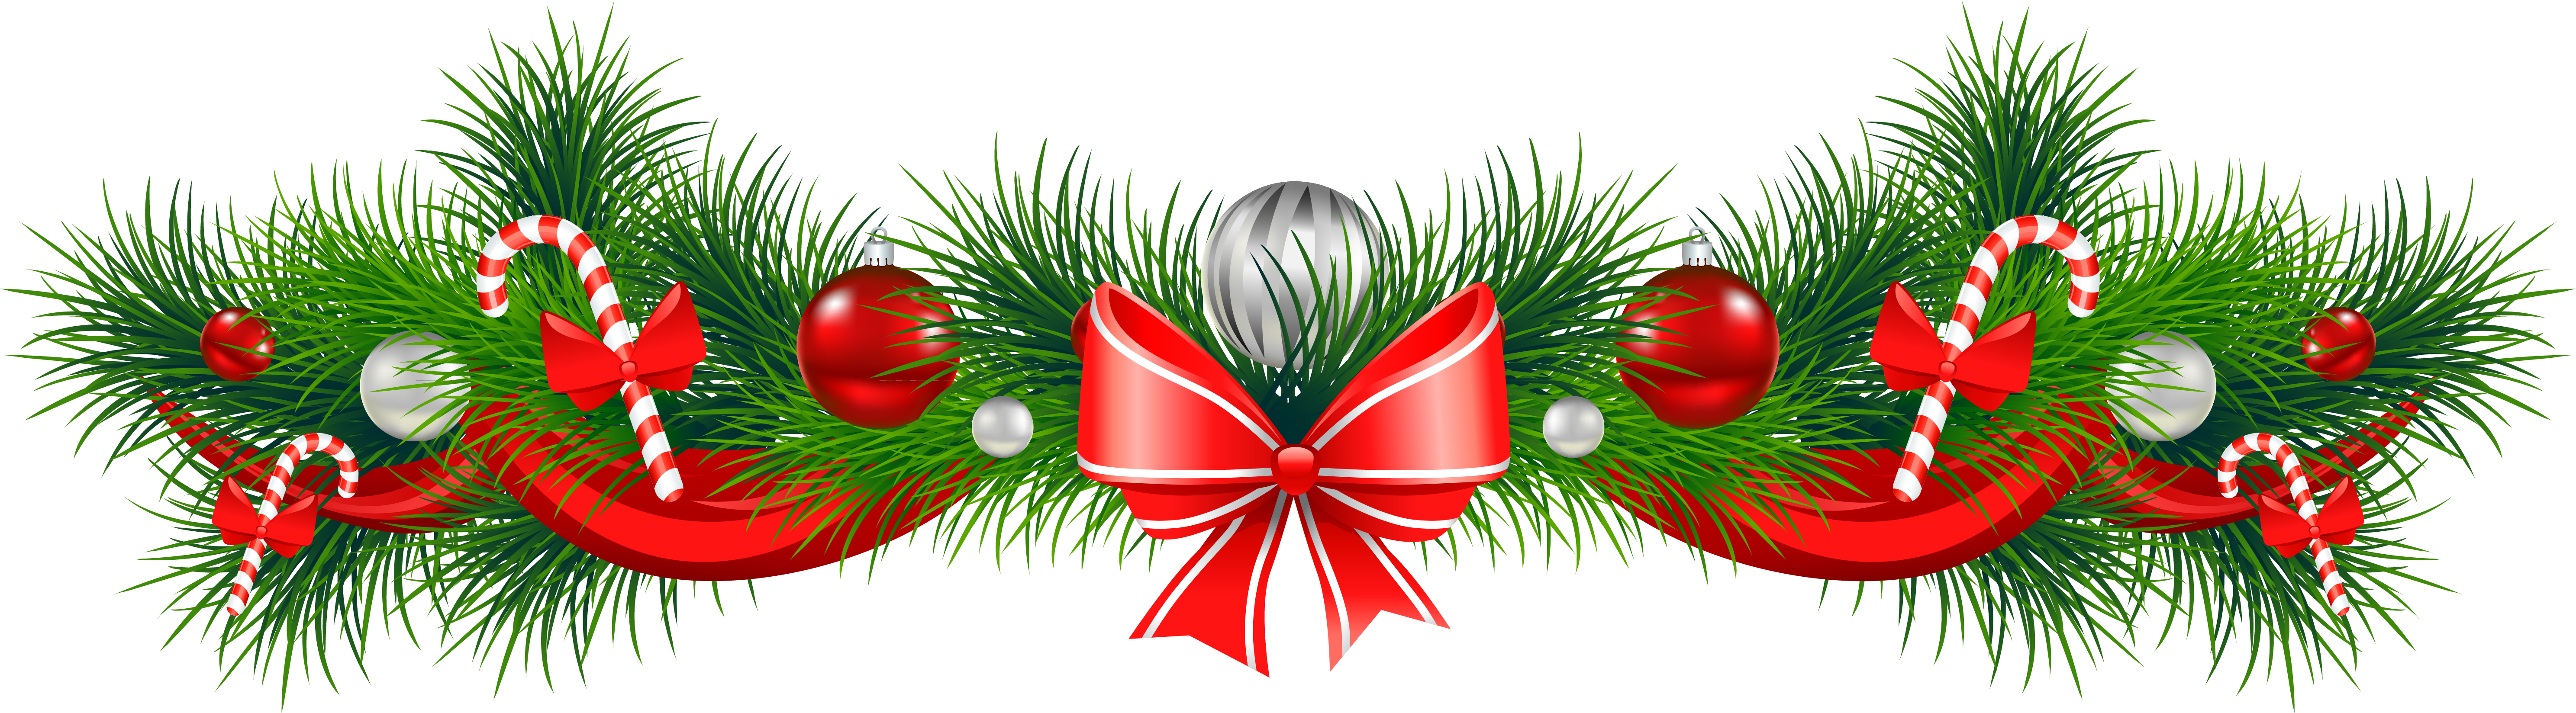 Download Holiday Christmas Free Clipart HD HQ PNG Image FreePNGImg.